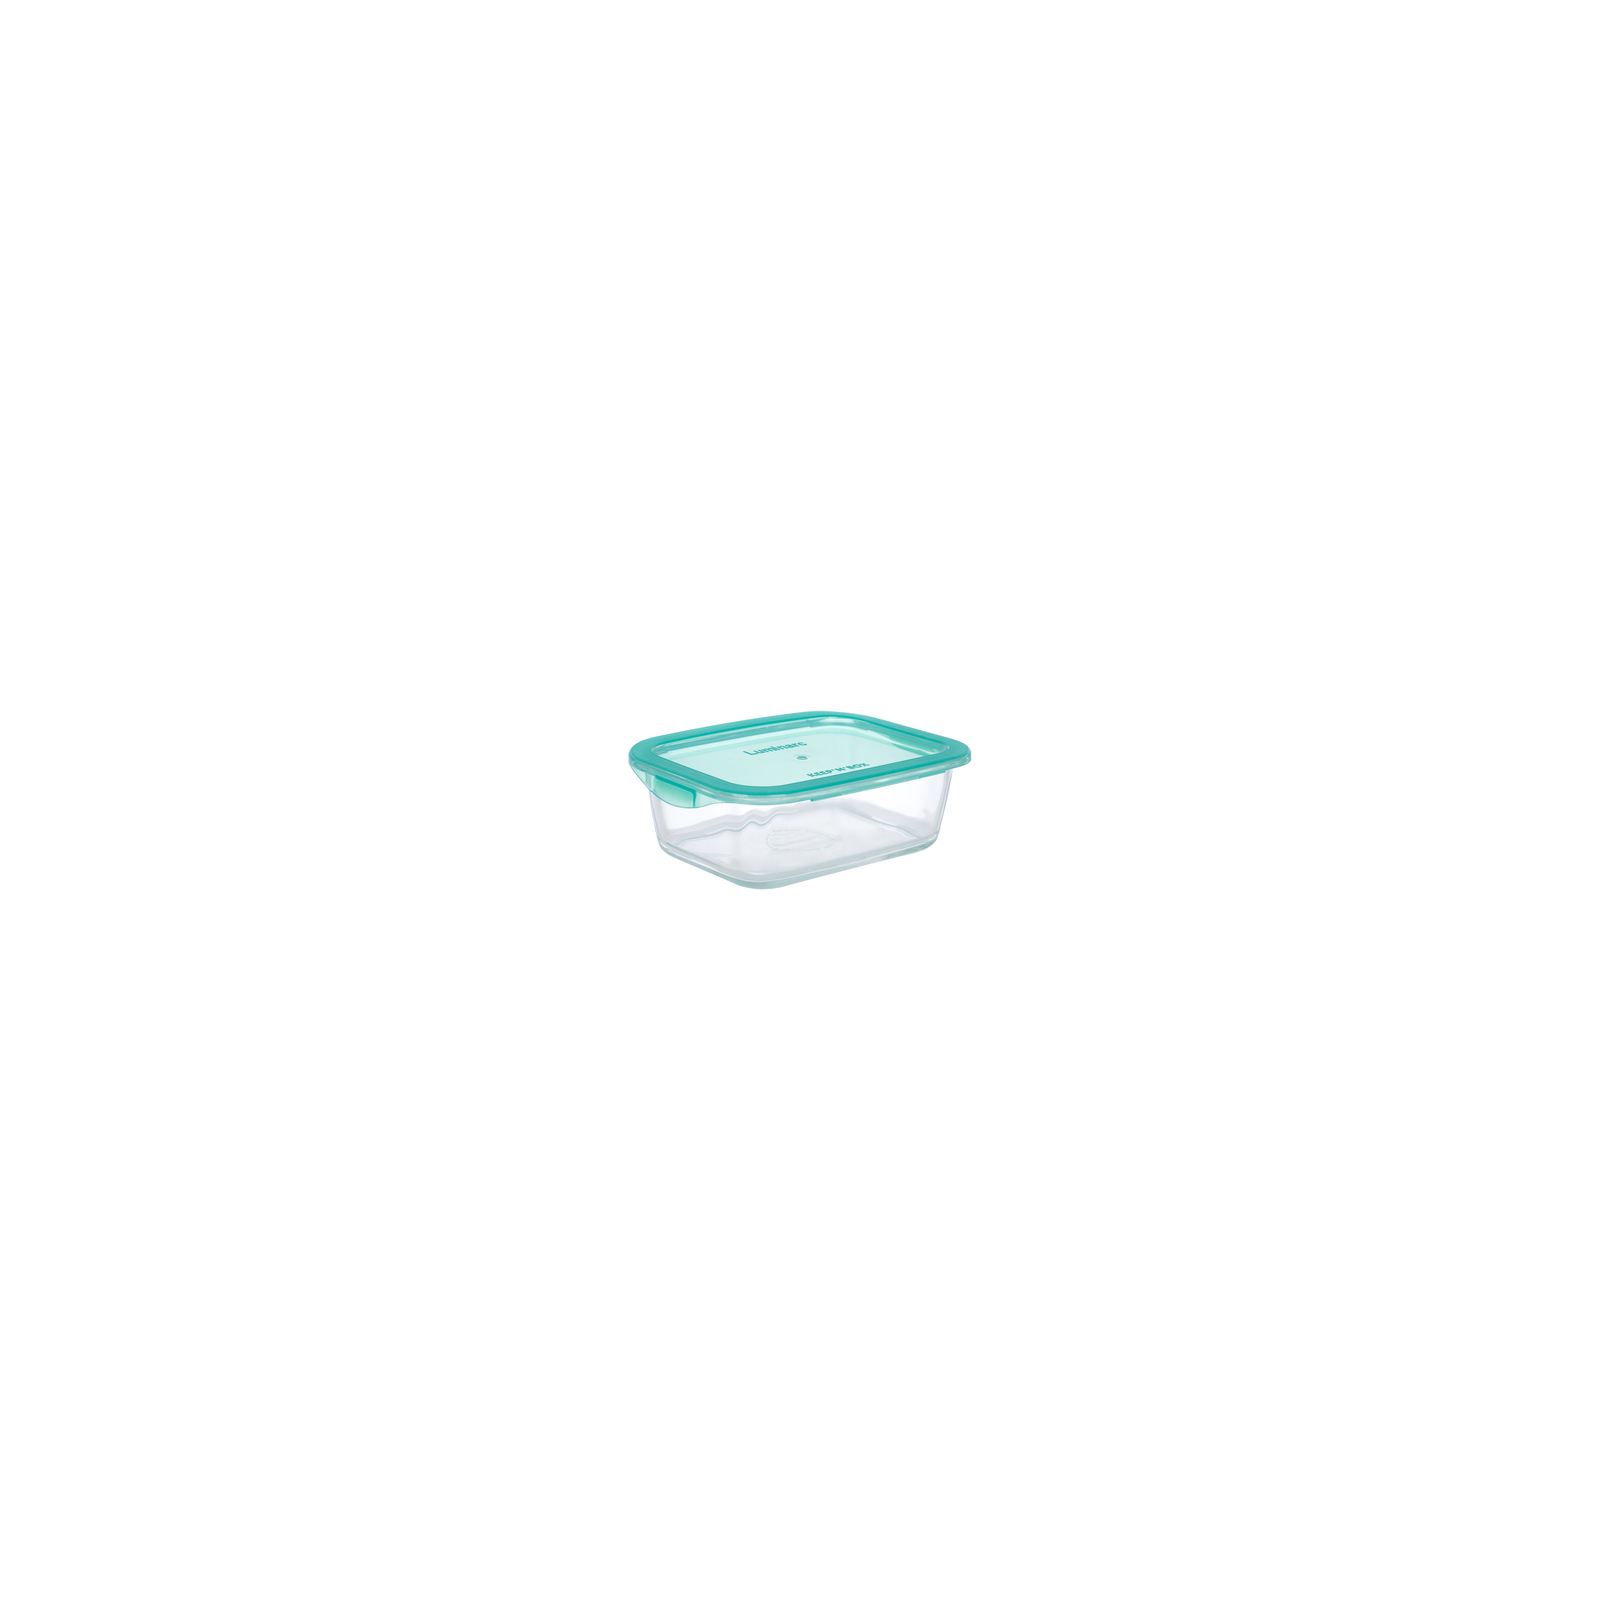 Пищевой контейнер Luminarc Keep'n Box Lagoon набор 2шт прямоуг. 820мл/1220мл (P5506) изображение 6